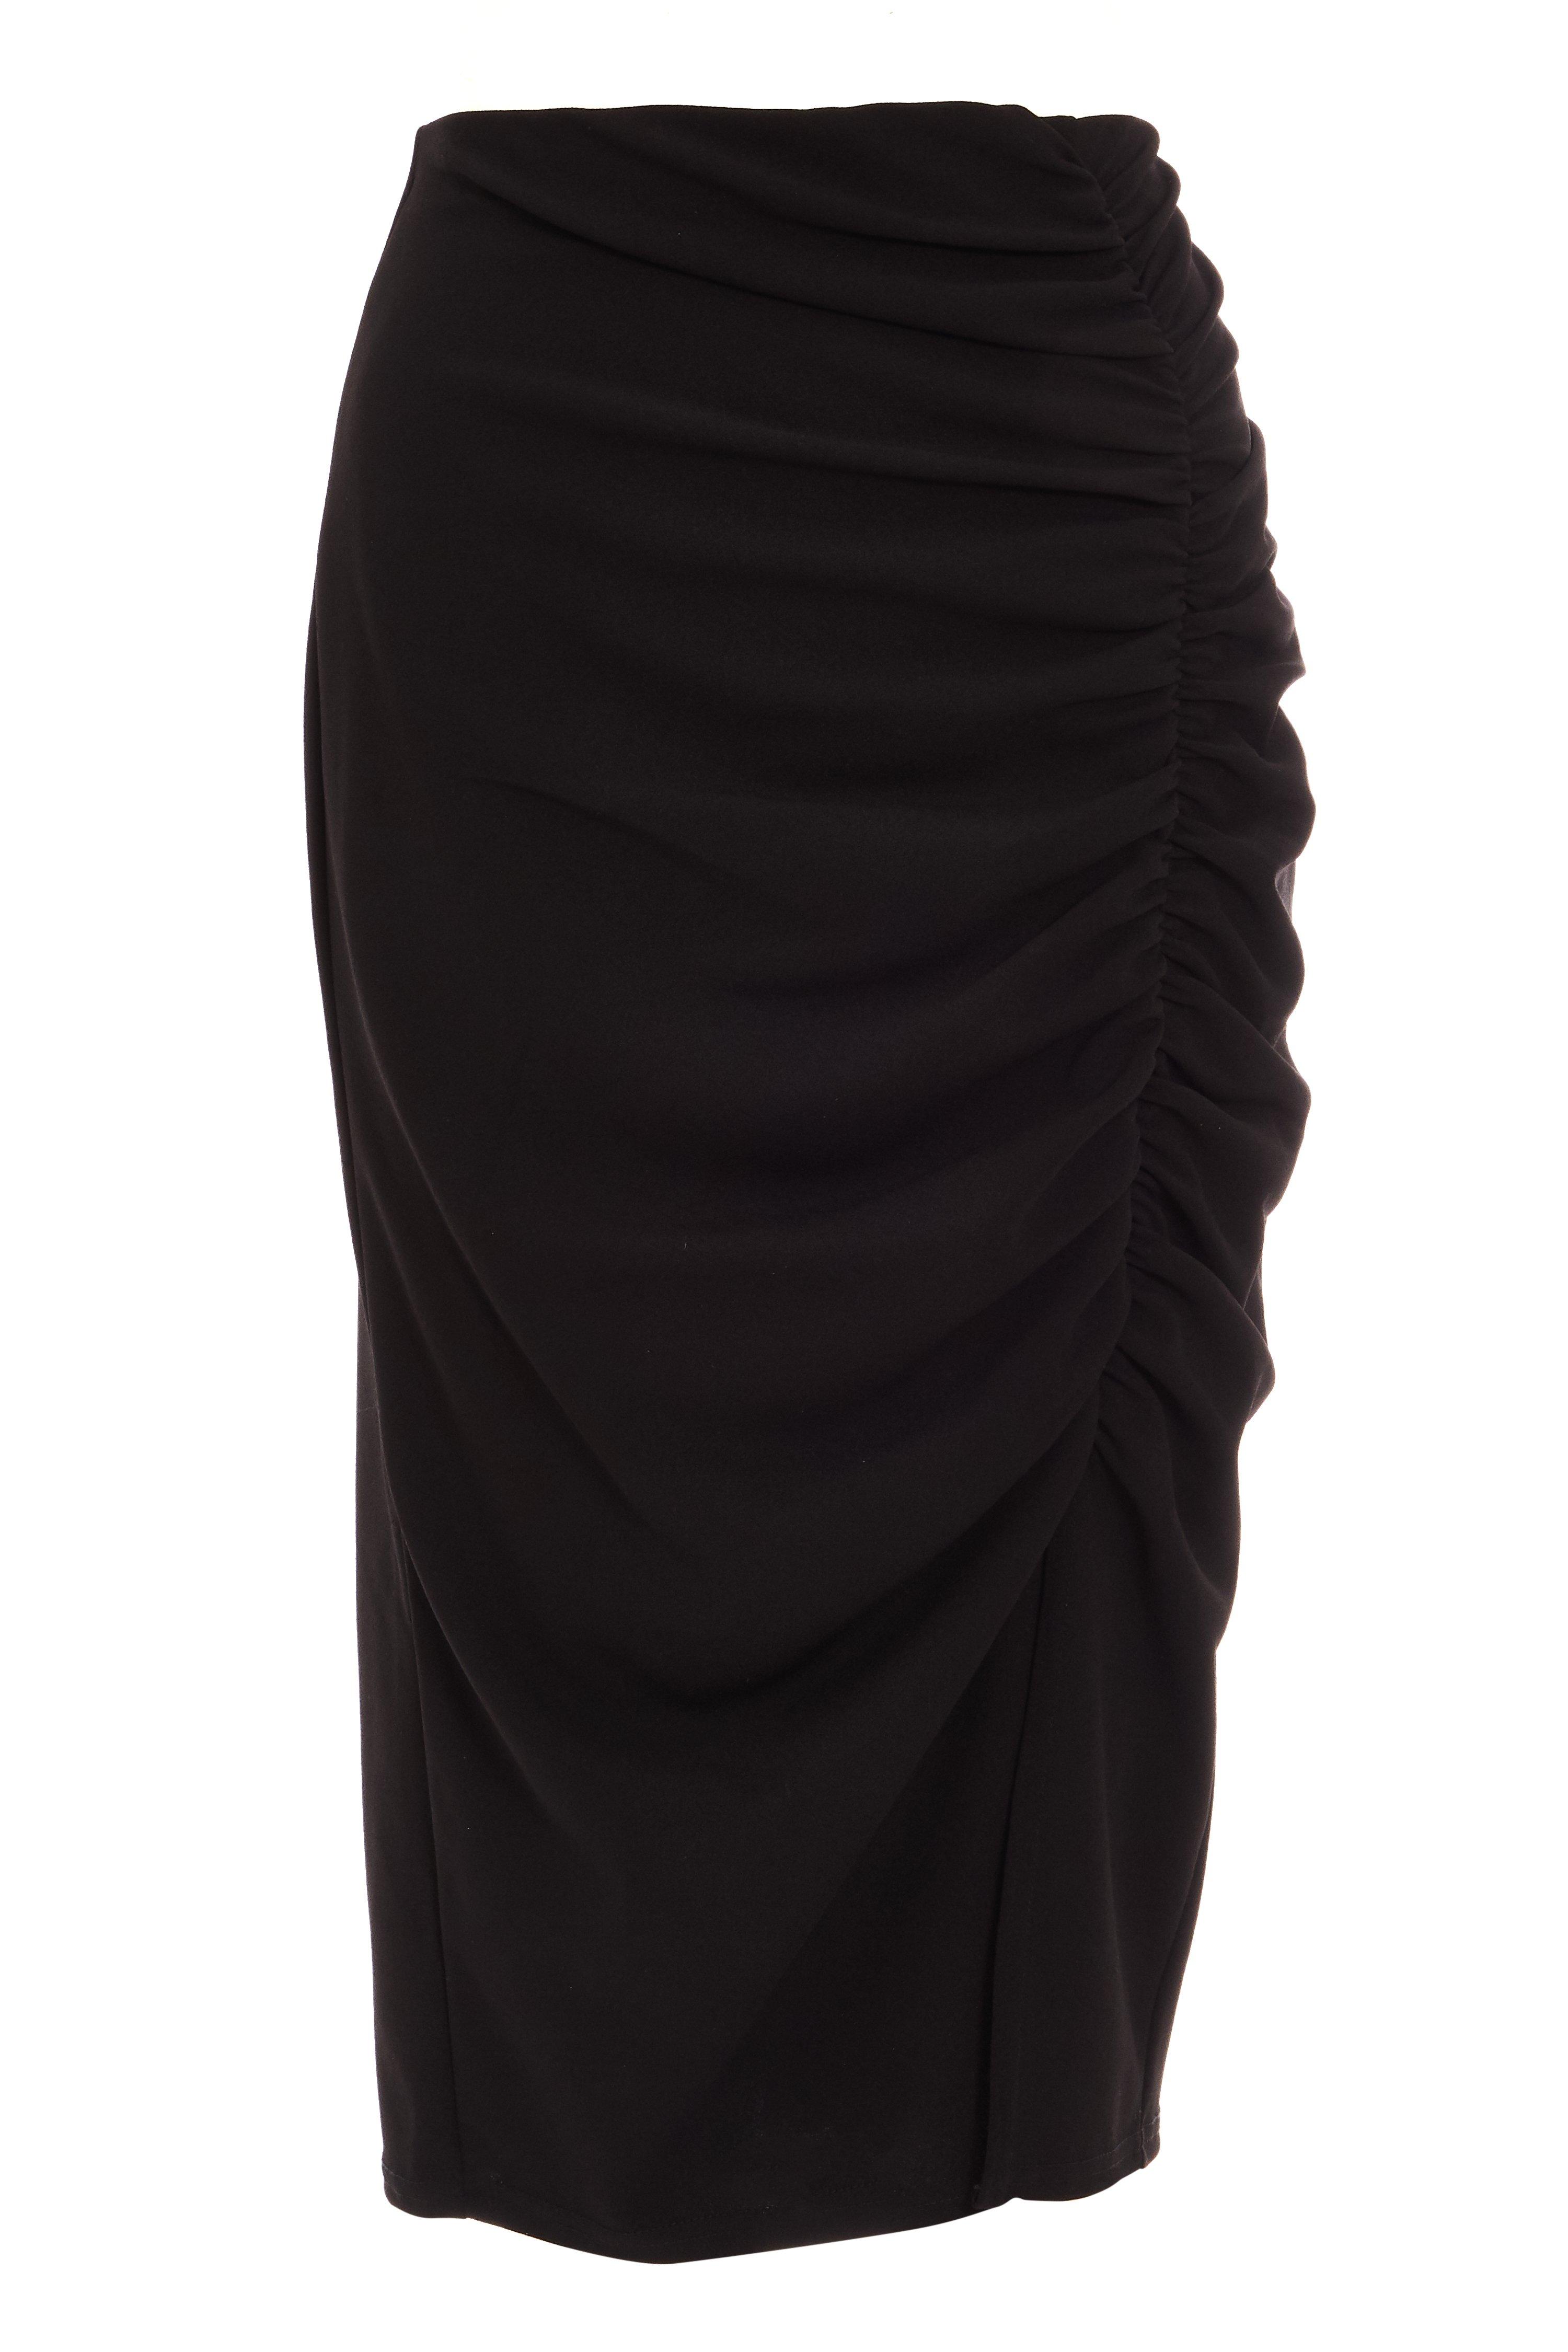 Black Ruched Midi Skirt - Quiz Clothing